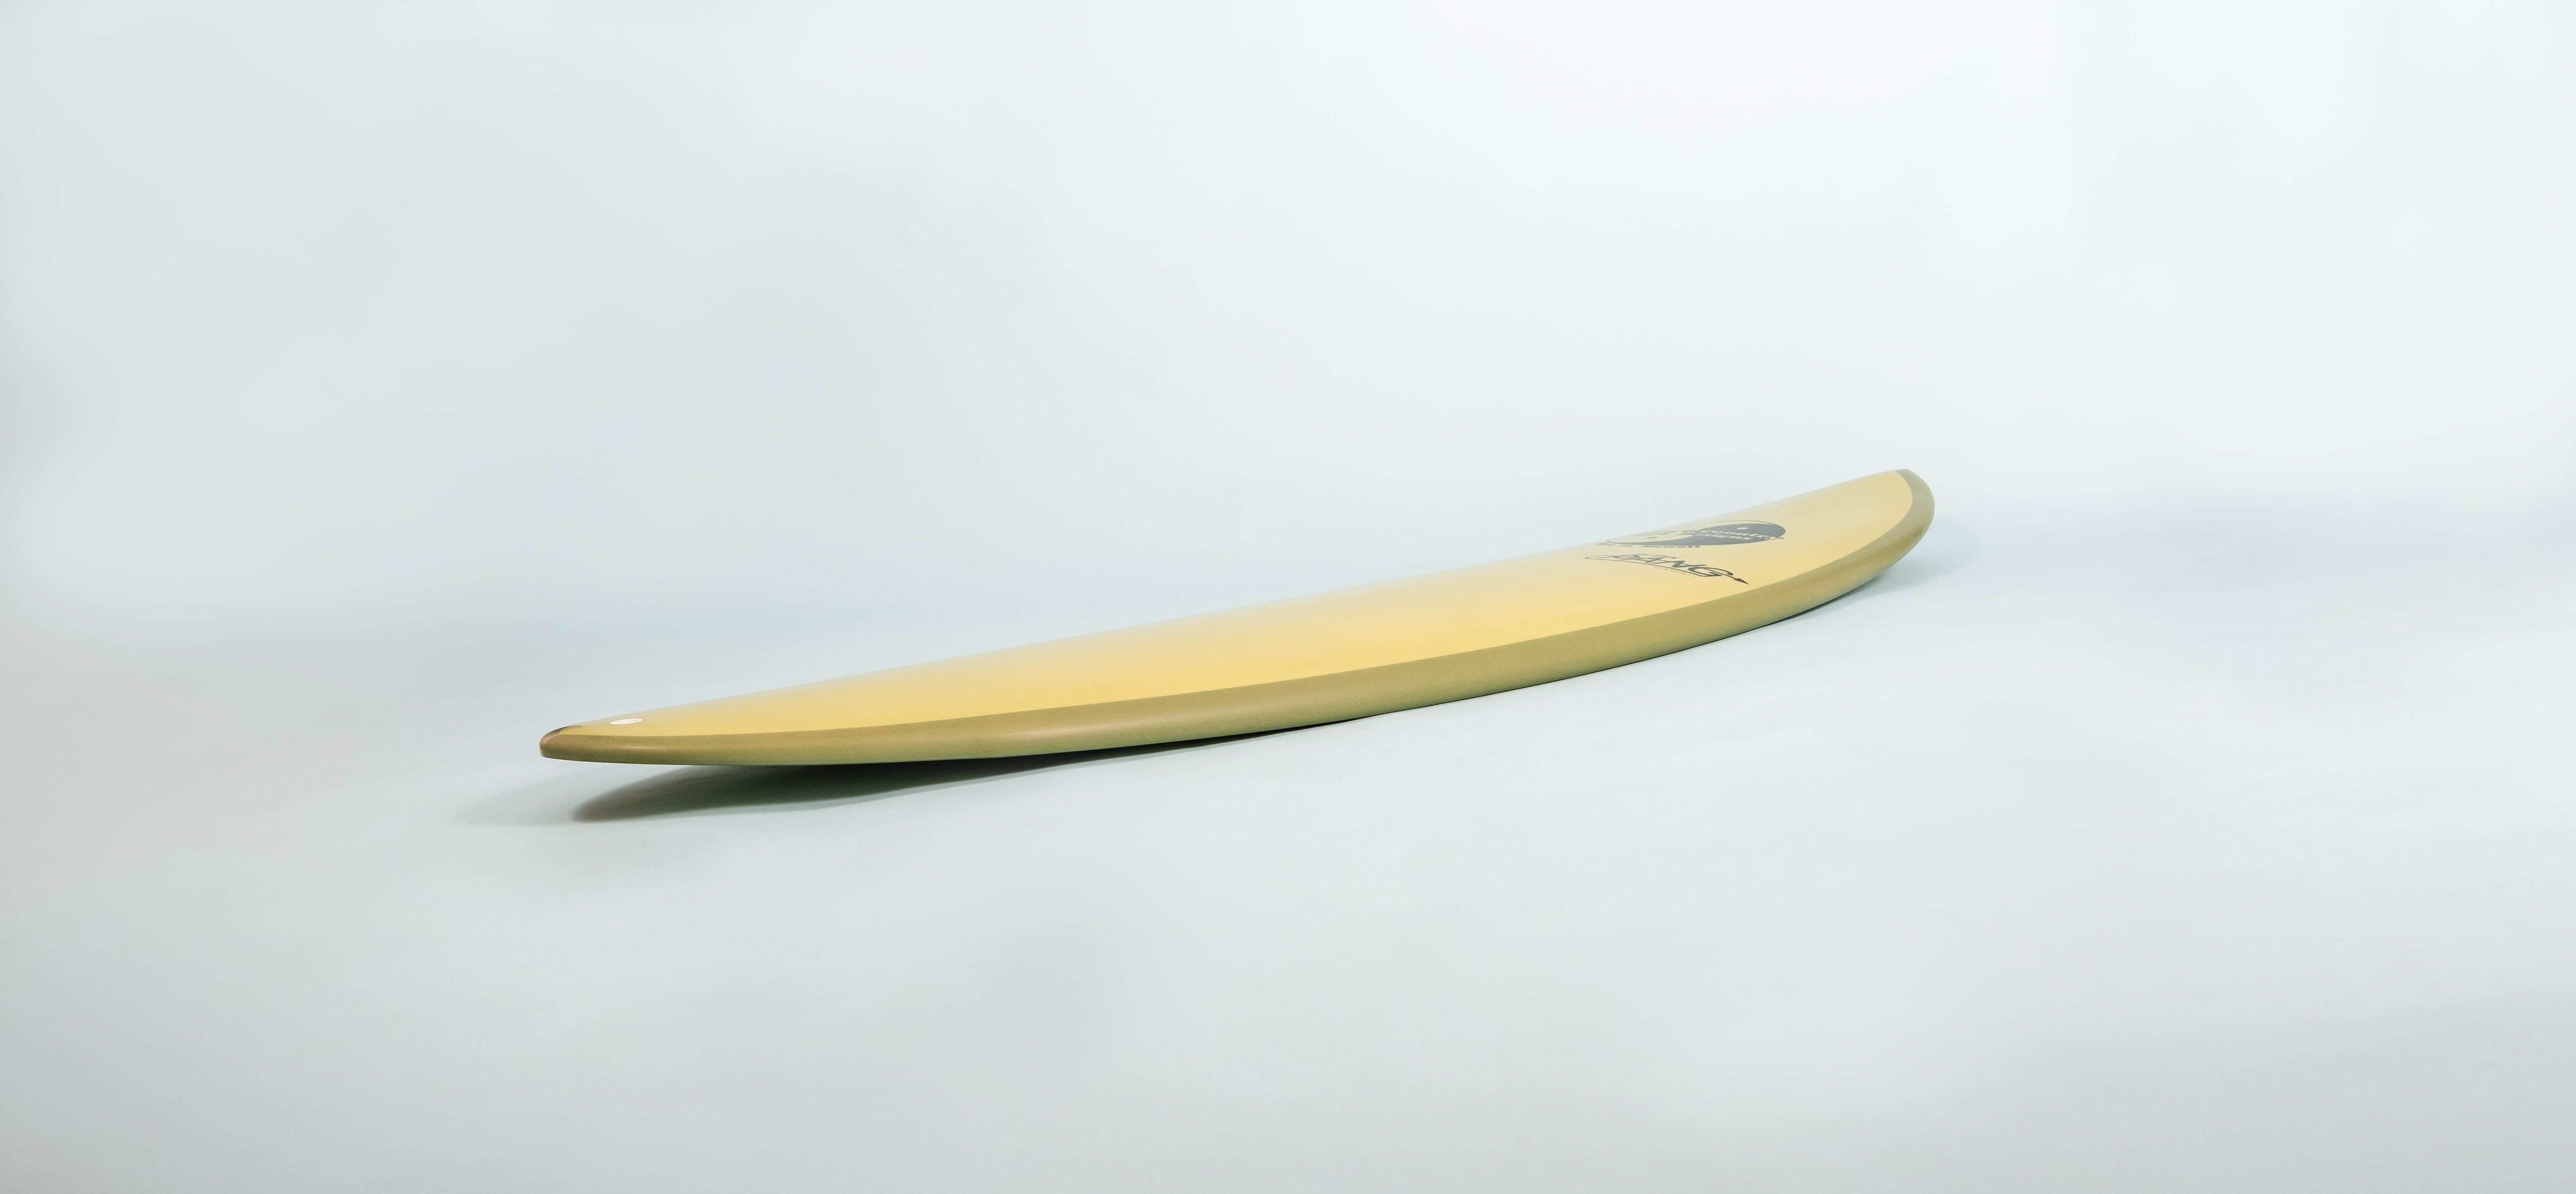 T&C Surf Designs - Glenn Pang - MDL